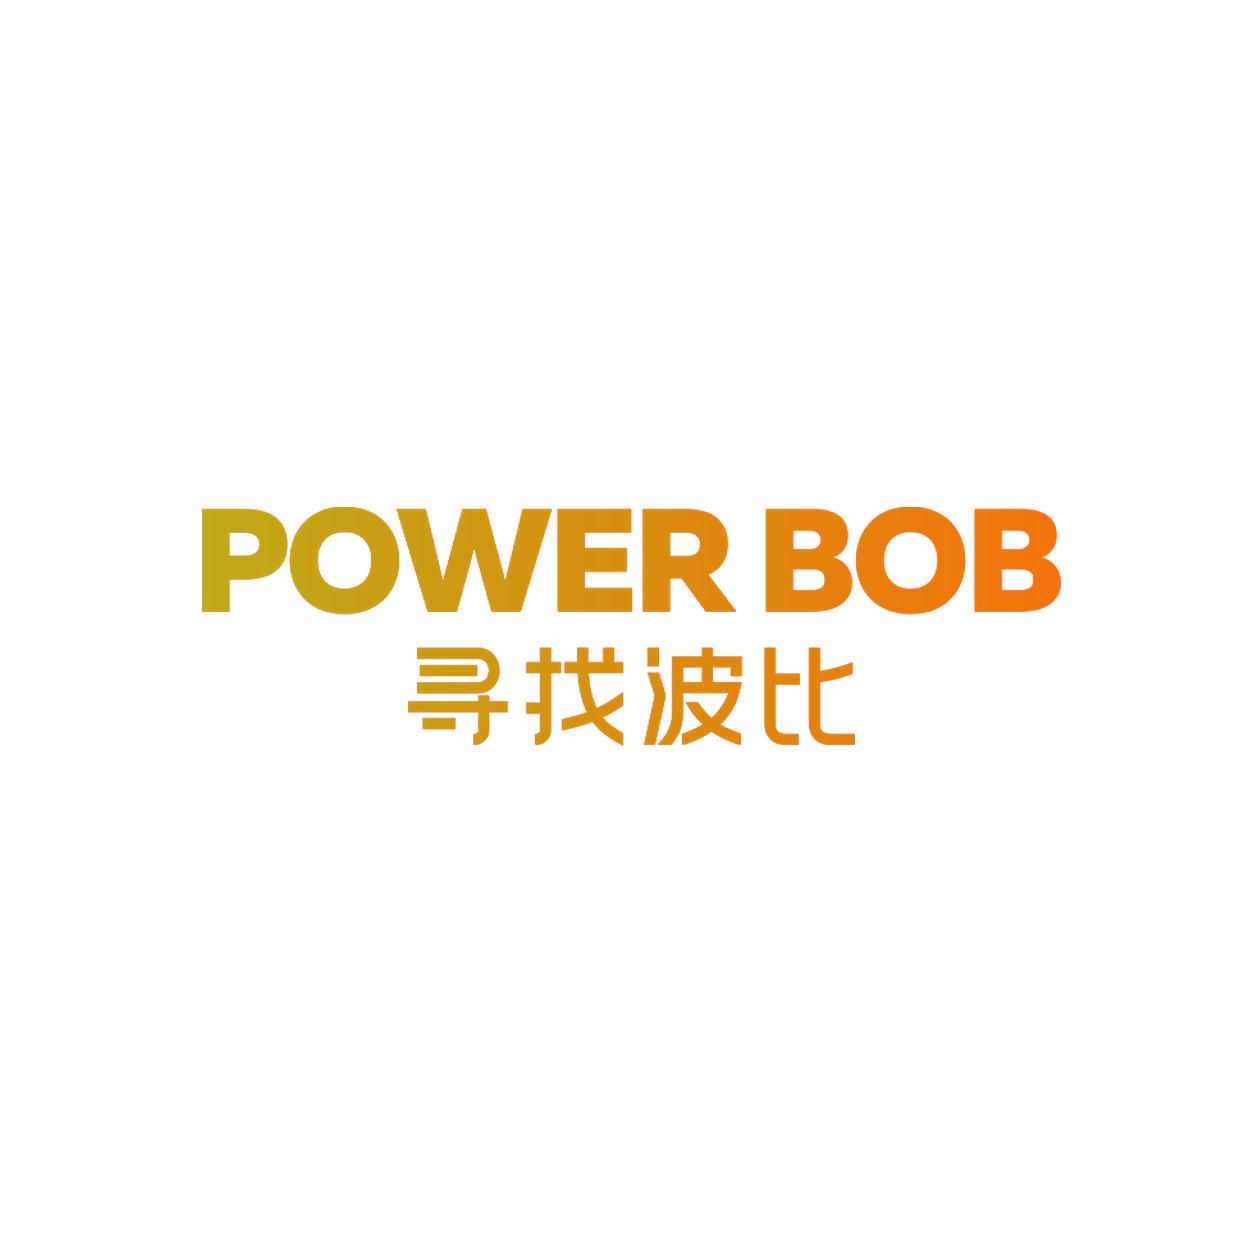 POWER BOB 寻找波比